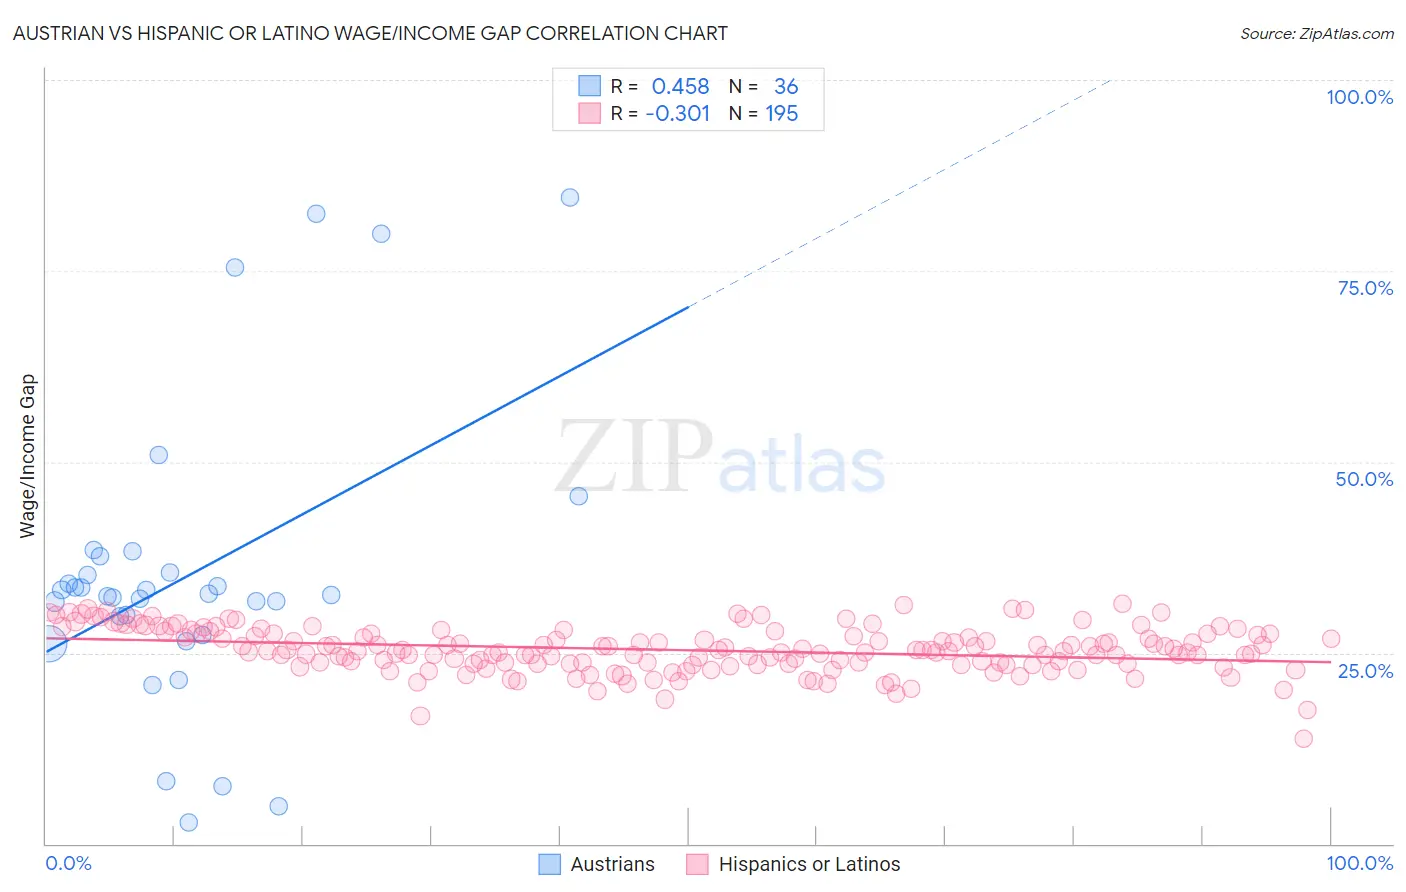 Austrian vs Hispanic or Latino Wage/Income Gap